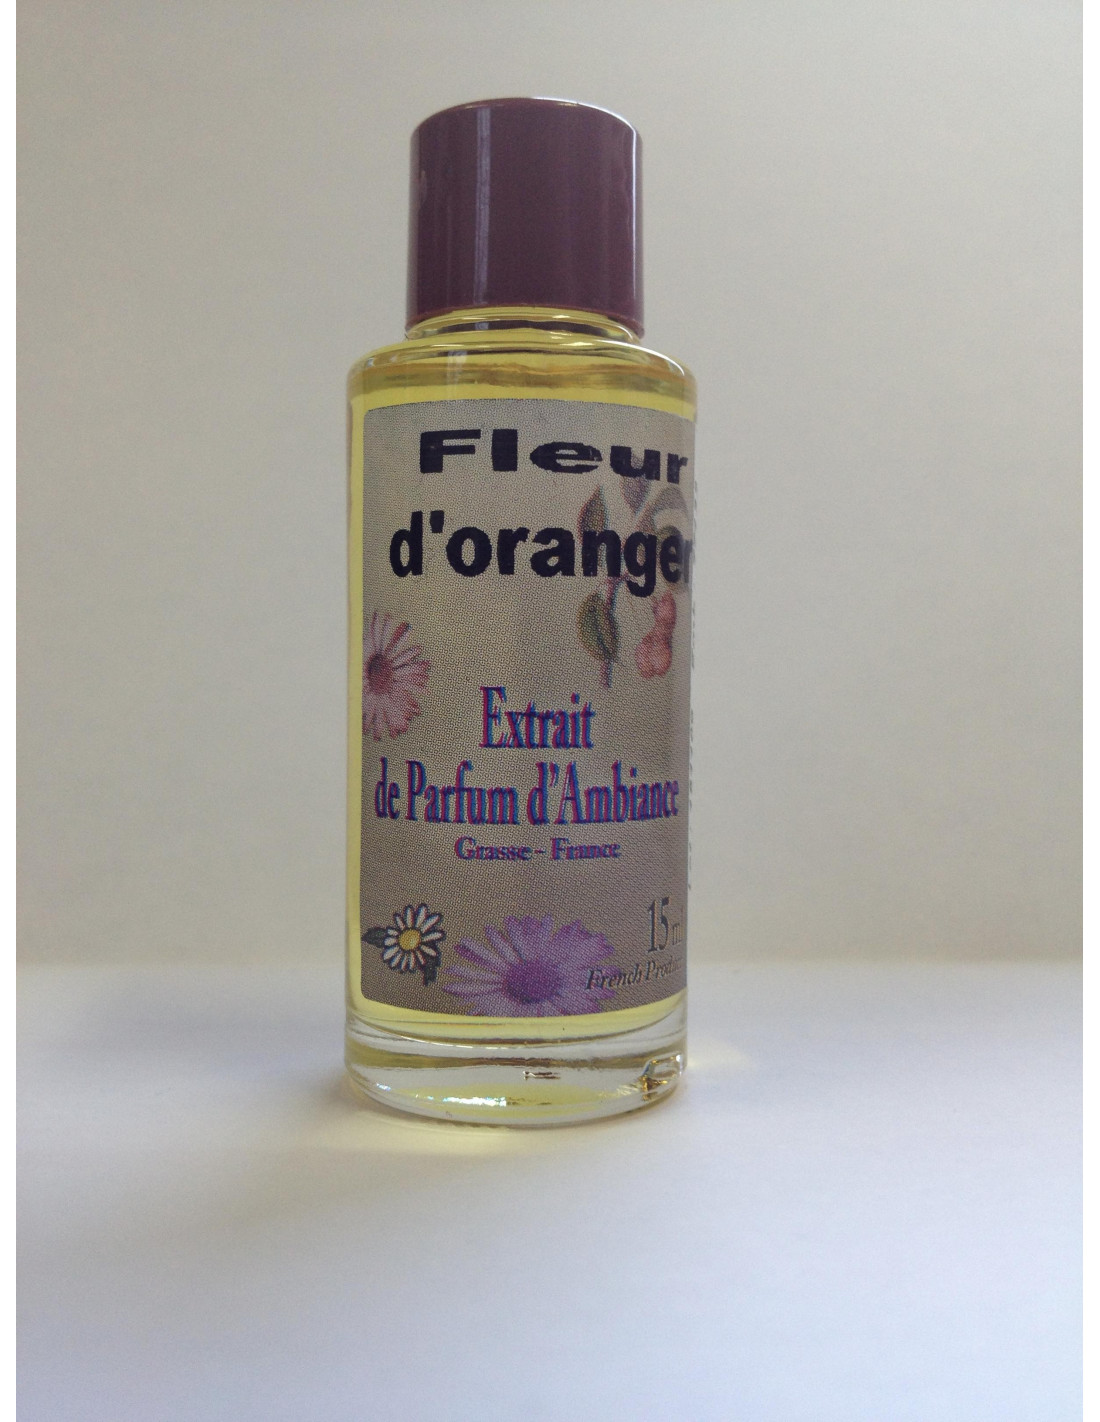 Pardico essence de parfum fleur d'oranger extra - 3ml - عطر زهر البرتقال